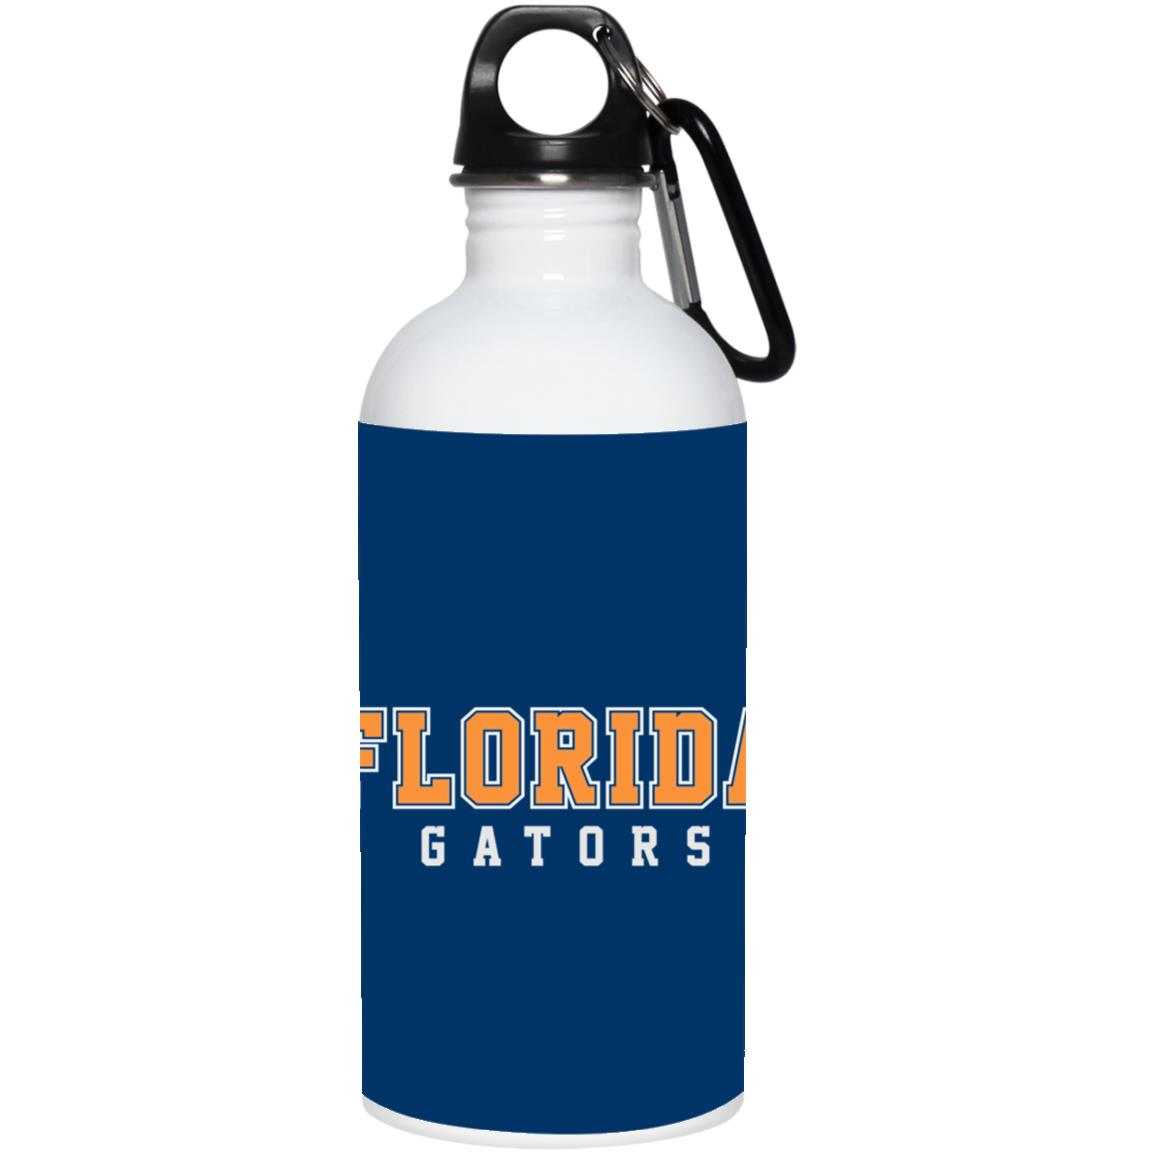 Florida Gators- Stainless Steel Water Bottle